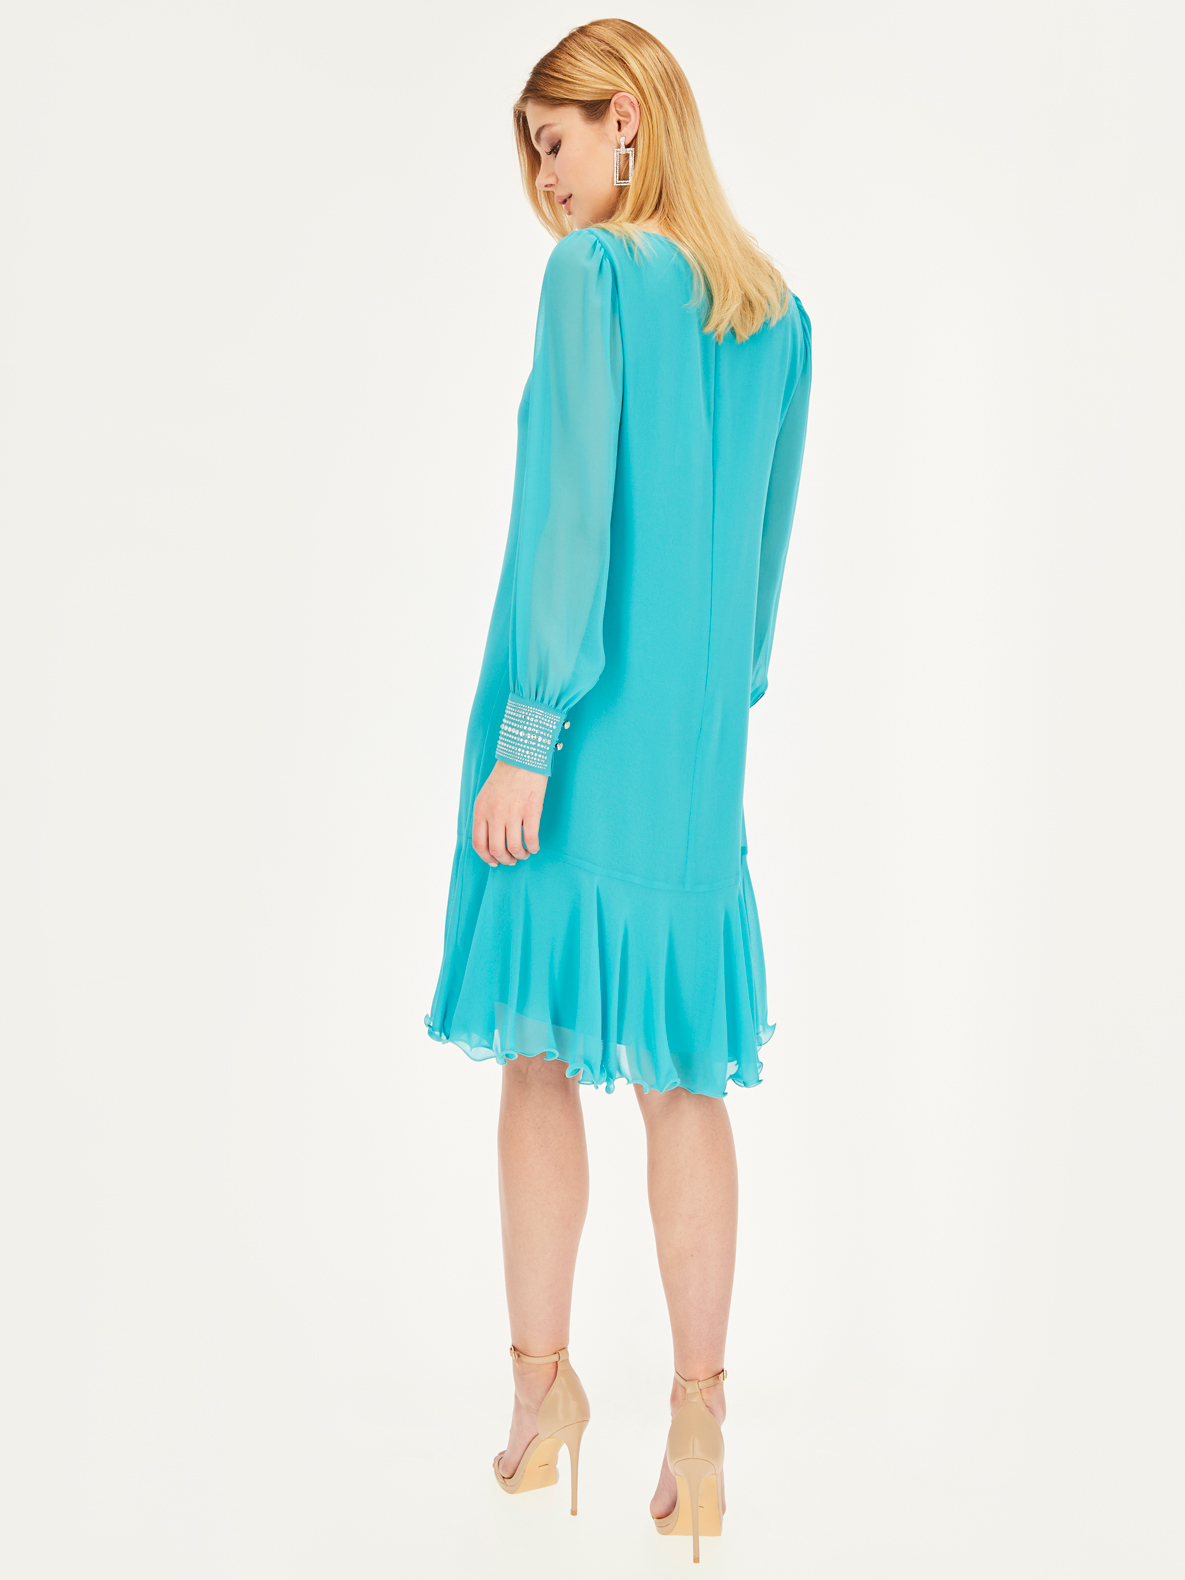 Dress Sante turquoise